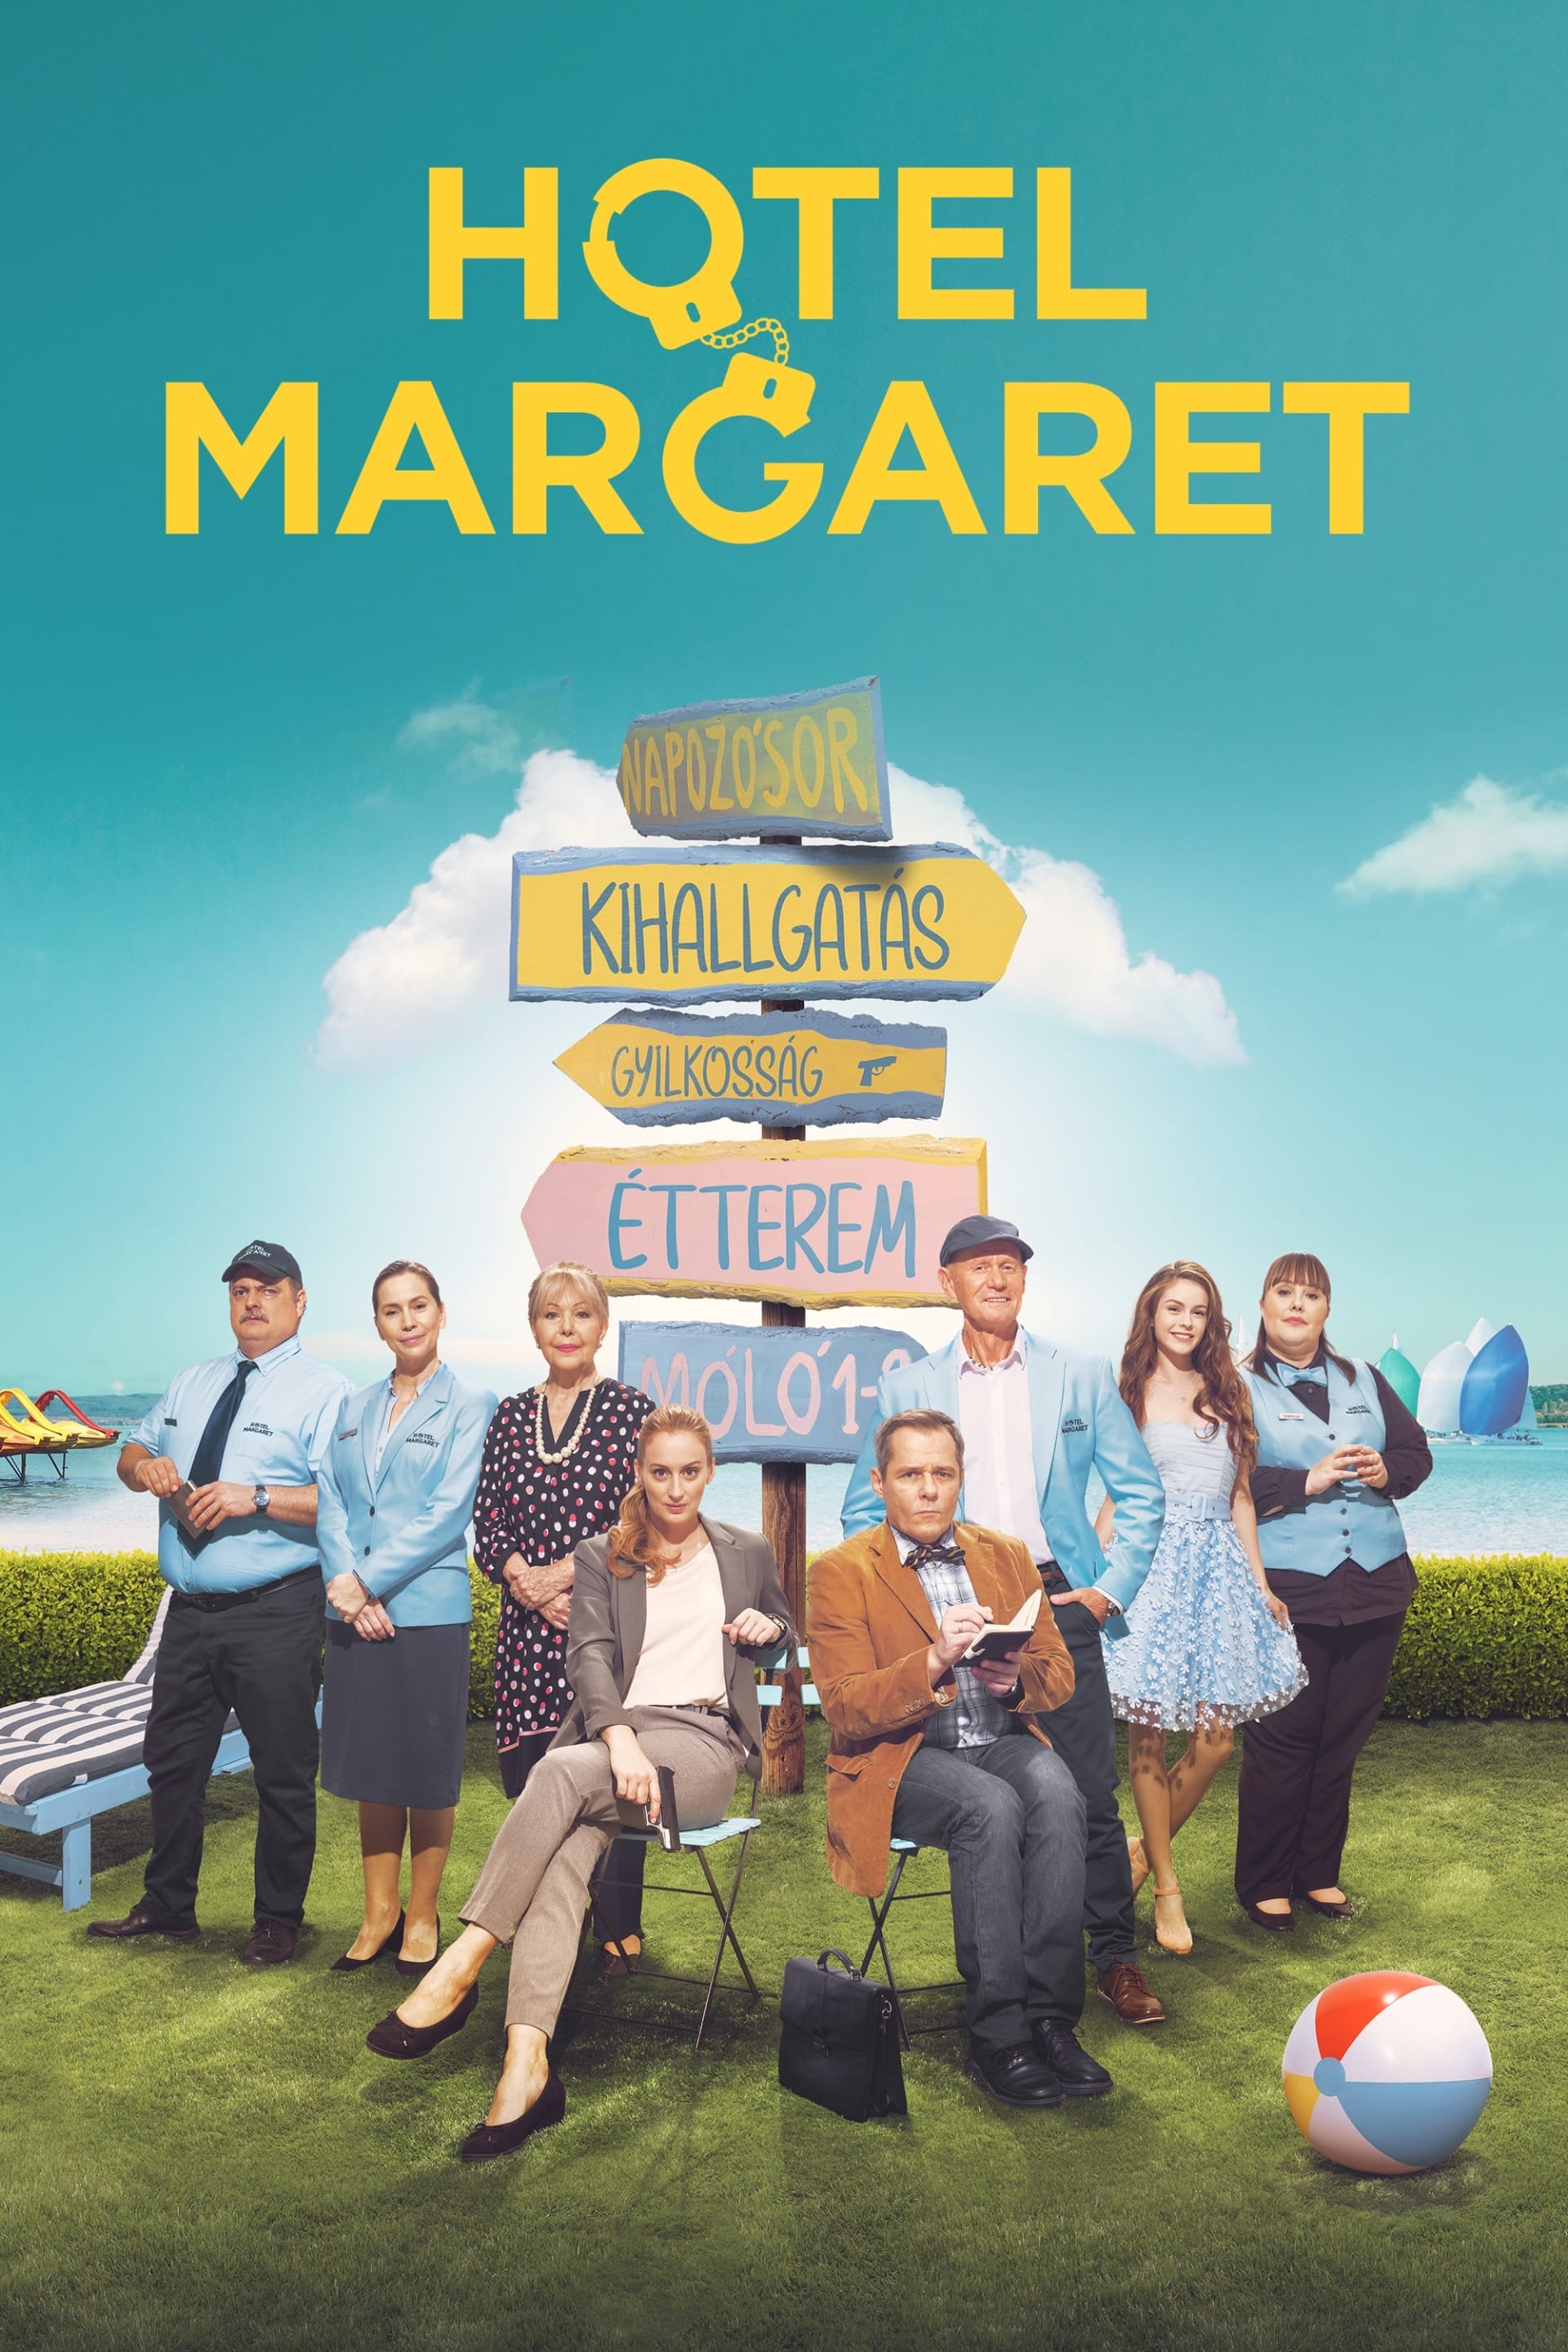 Hotel Margaret TV Shows About Social Media